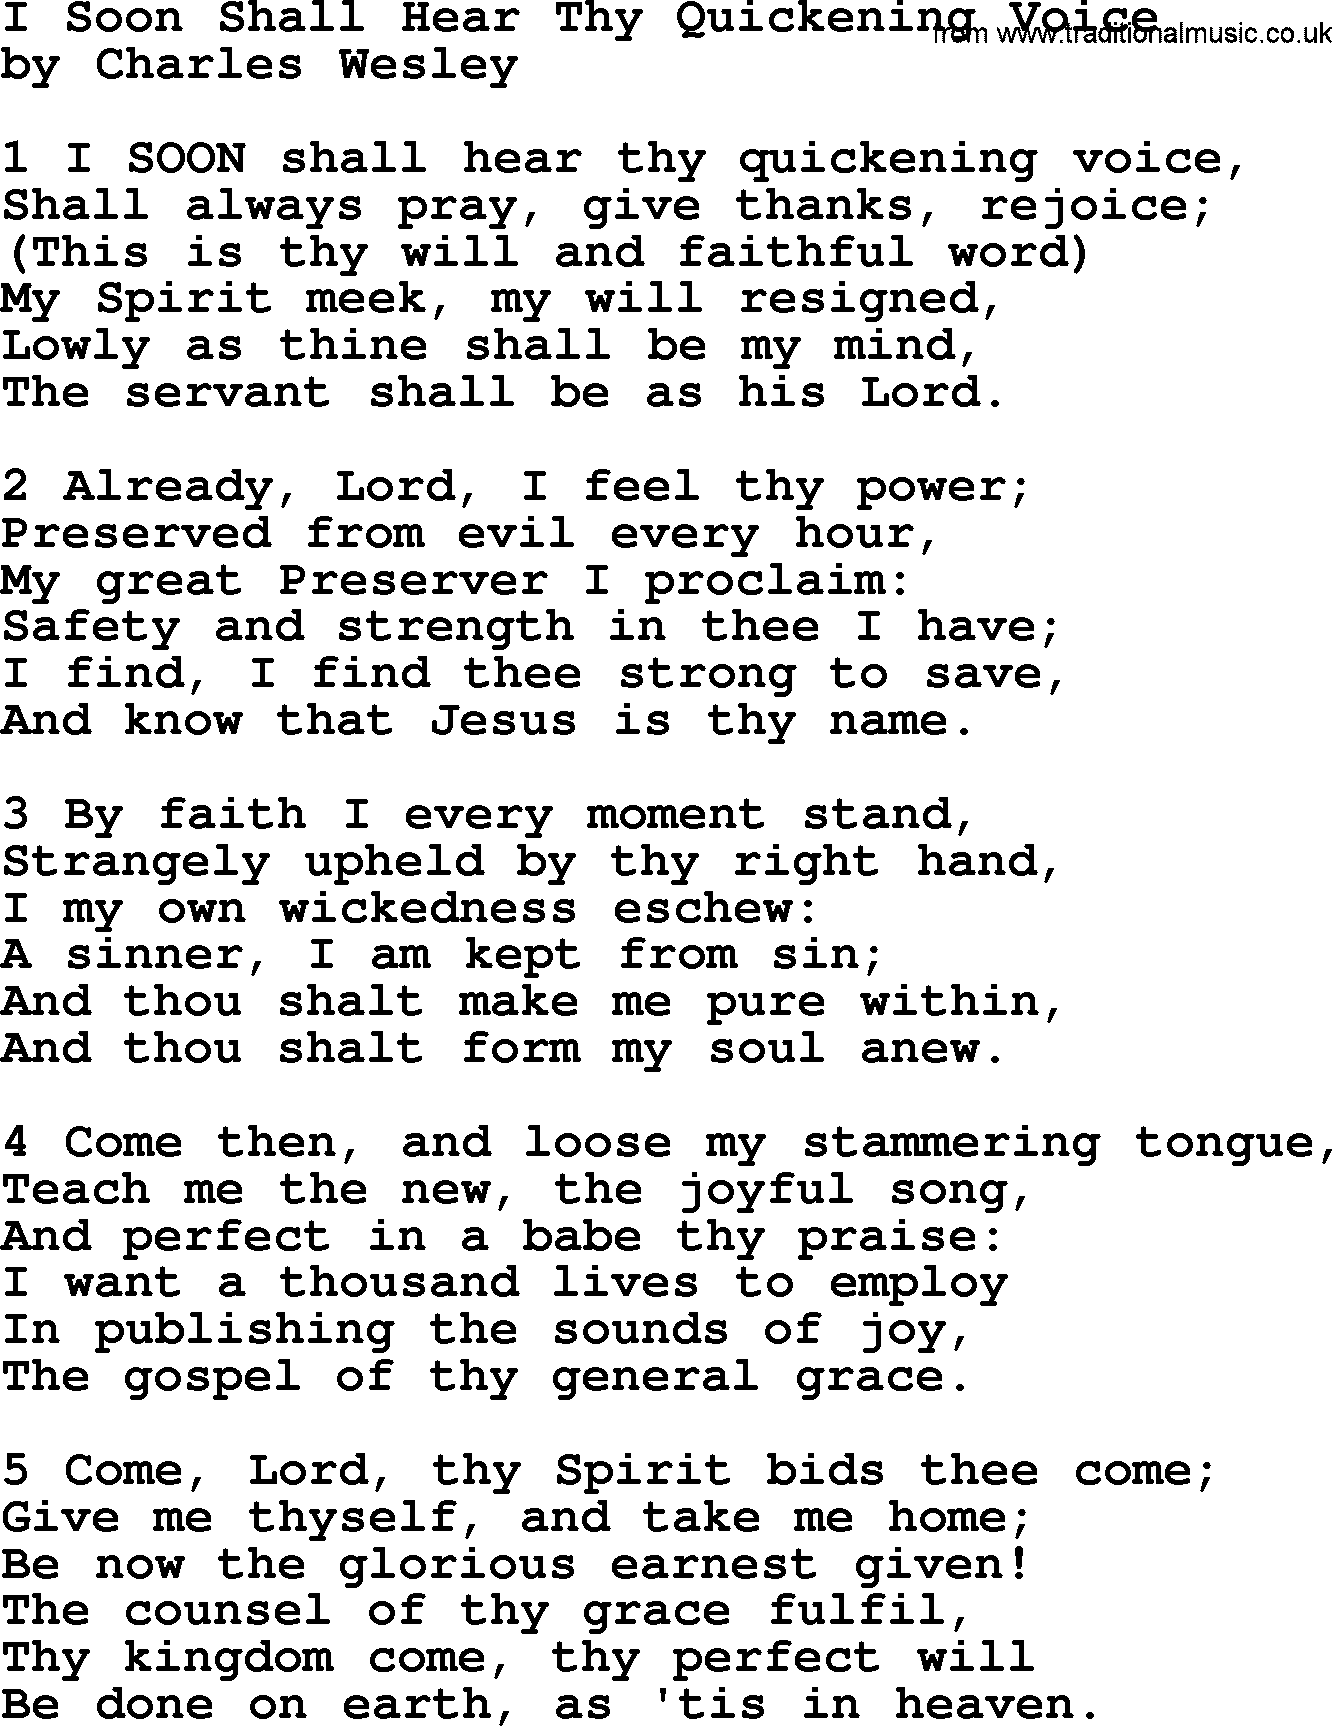 Charles Wesley hymn: I Soon Shall Hear Thy Quickening Voice, lyrics